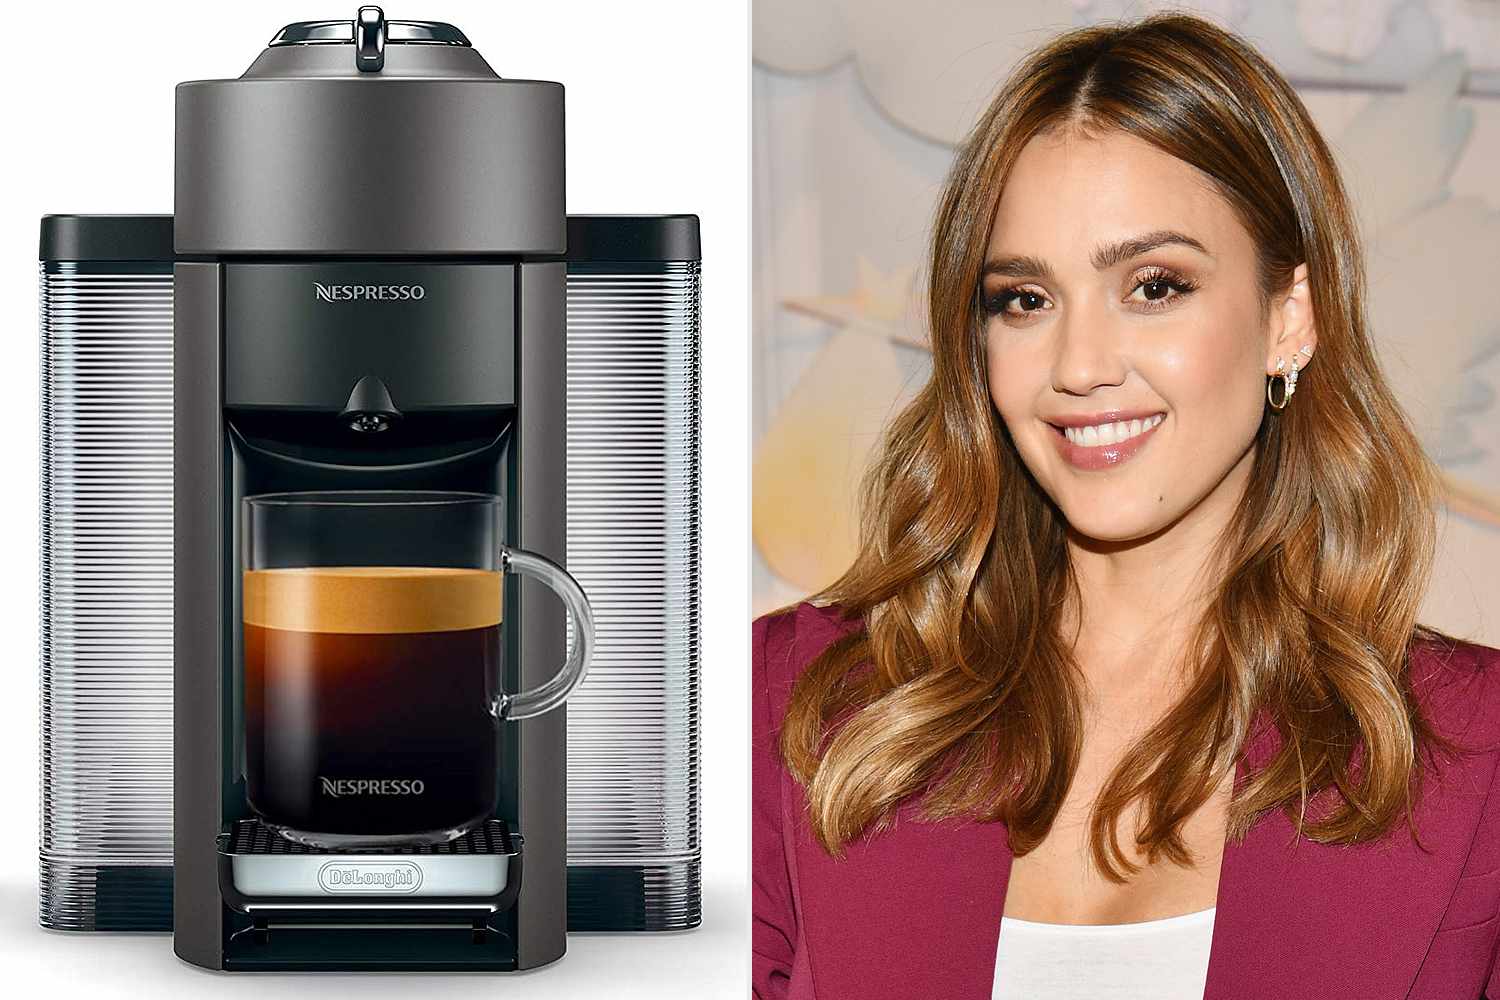 9 Best Nespresso Machines in 2021 - Reviews of Nespresso Coffee Makers